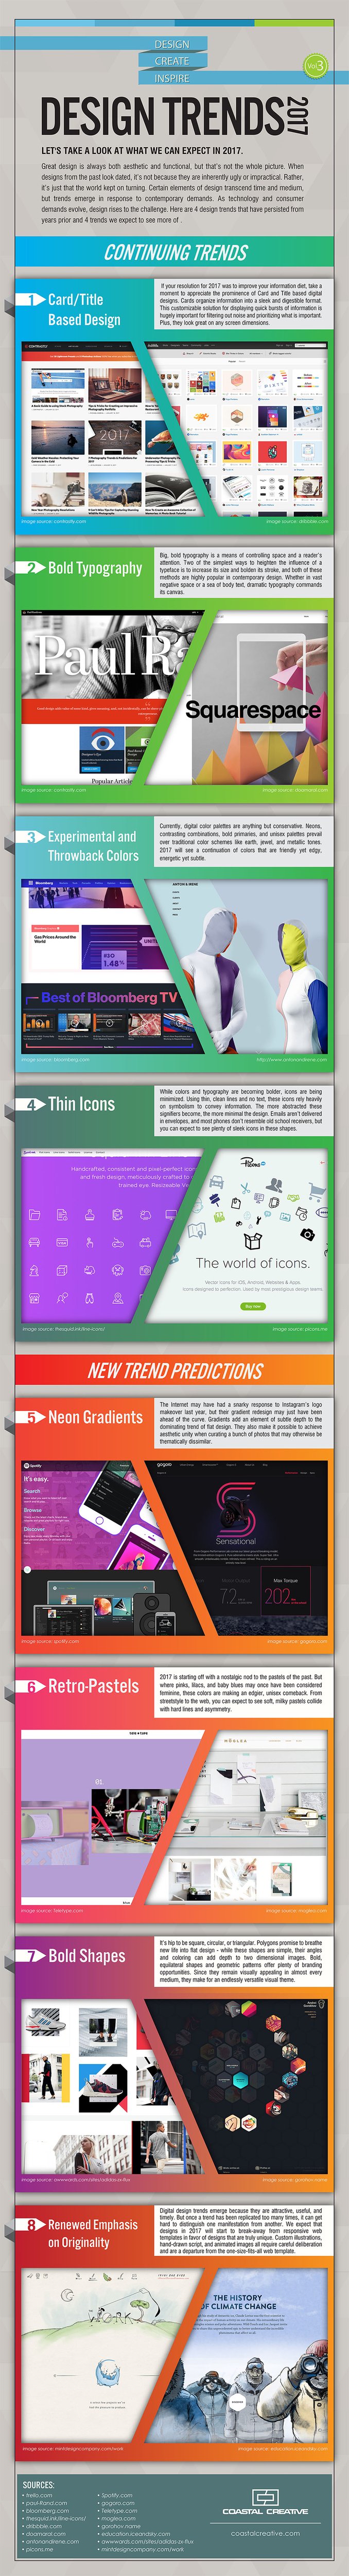 Design_Trends_2017-Infographic-1.jpg